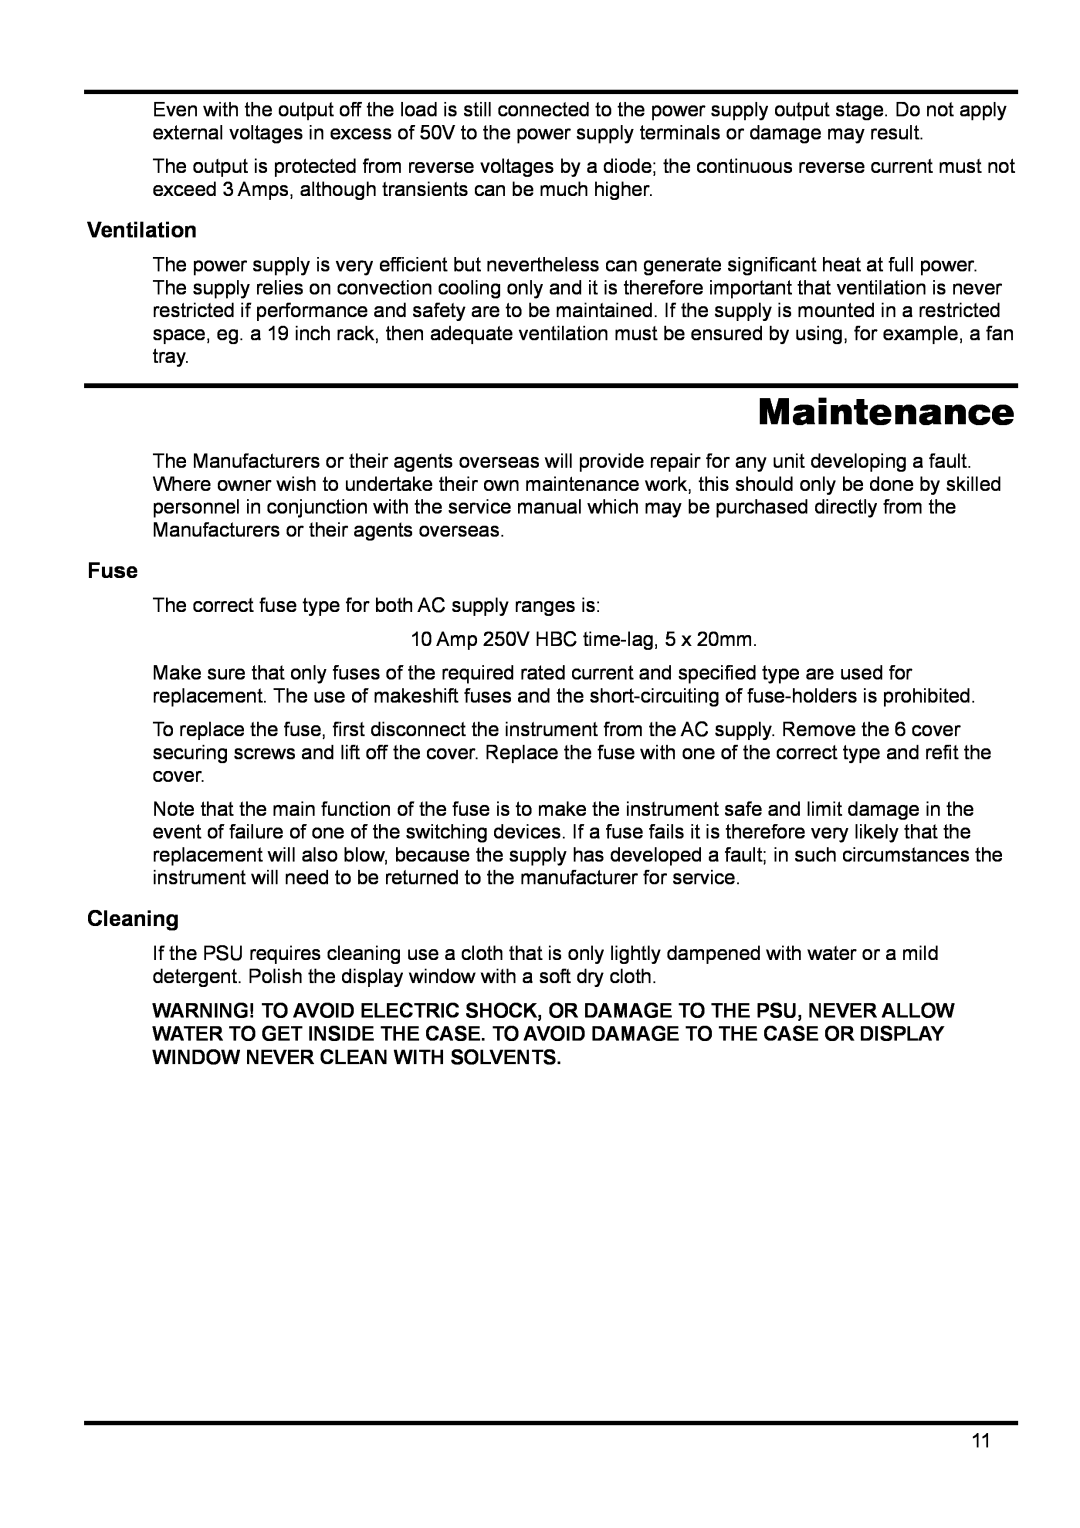 Xantrex Technology XPF 35-10 manual Maintenance, Ventilation, Fuse, Cleaning 